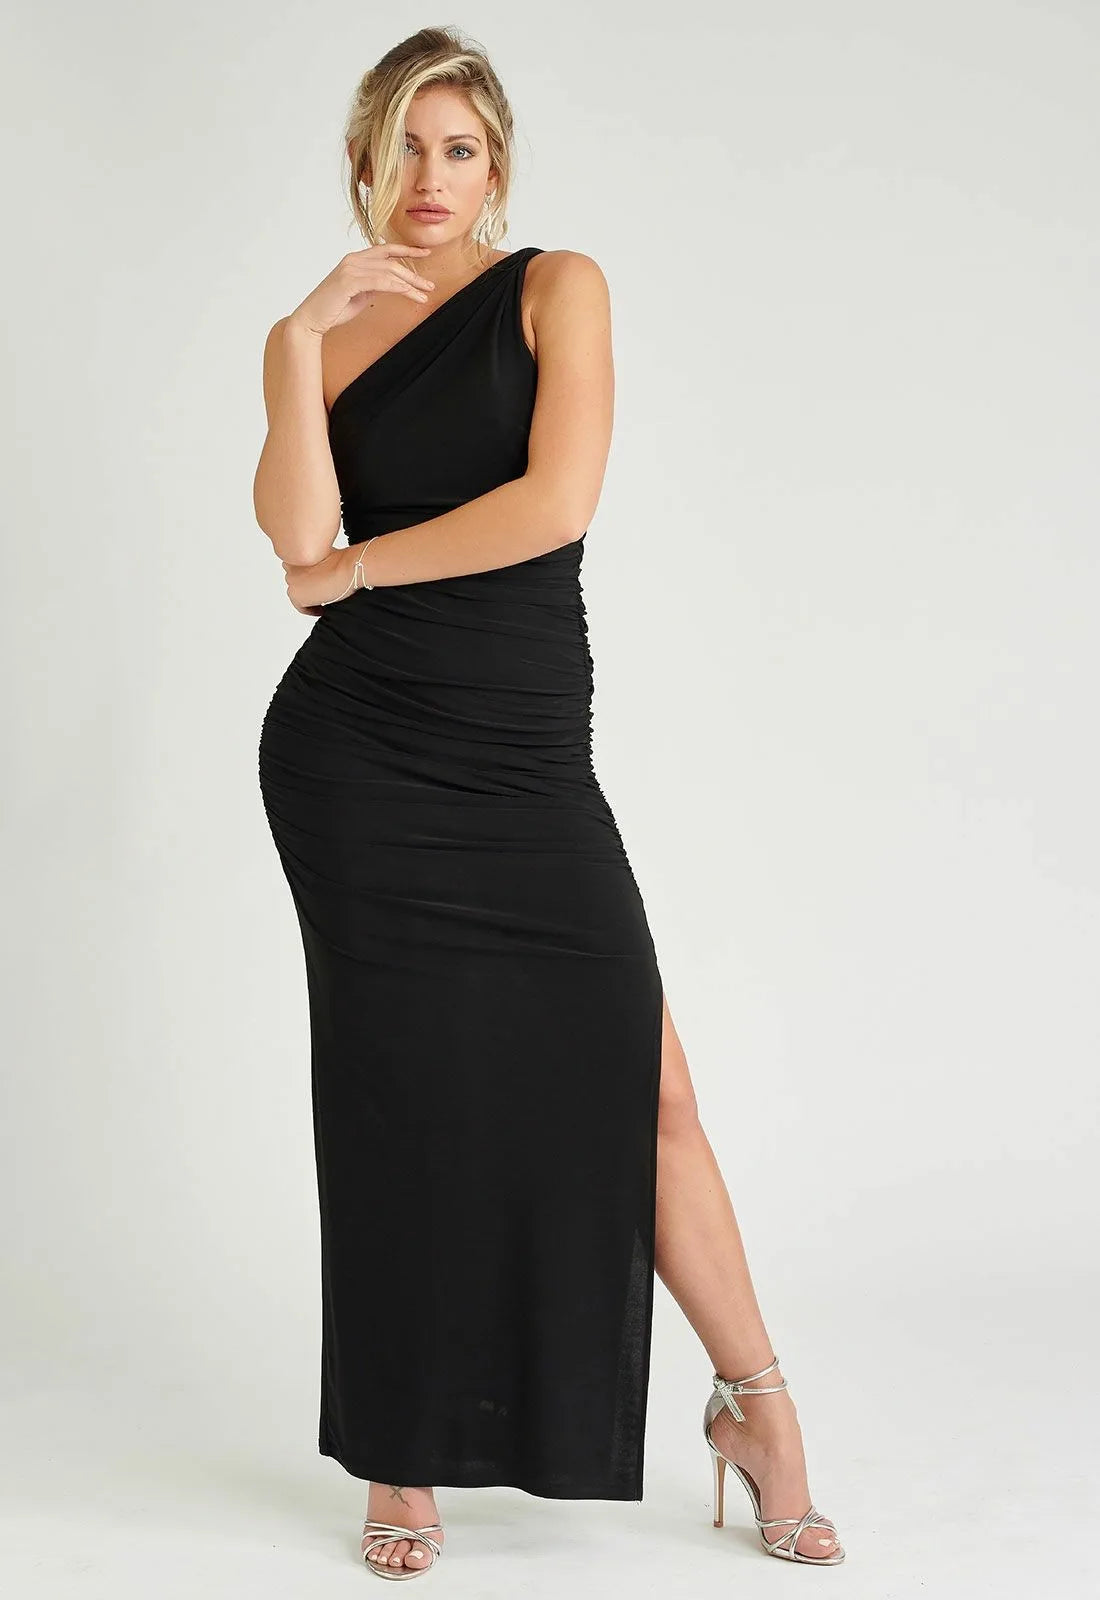 Revie For Little Black Dress Angelina One Shoulder Bodycon Dress in Black